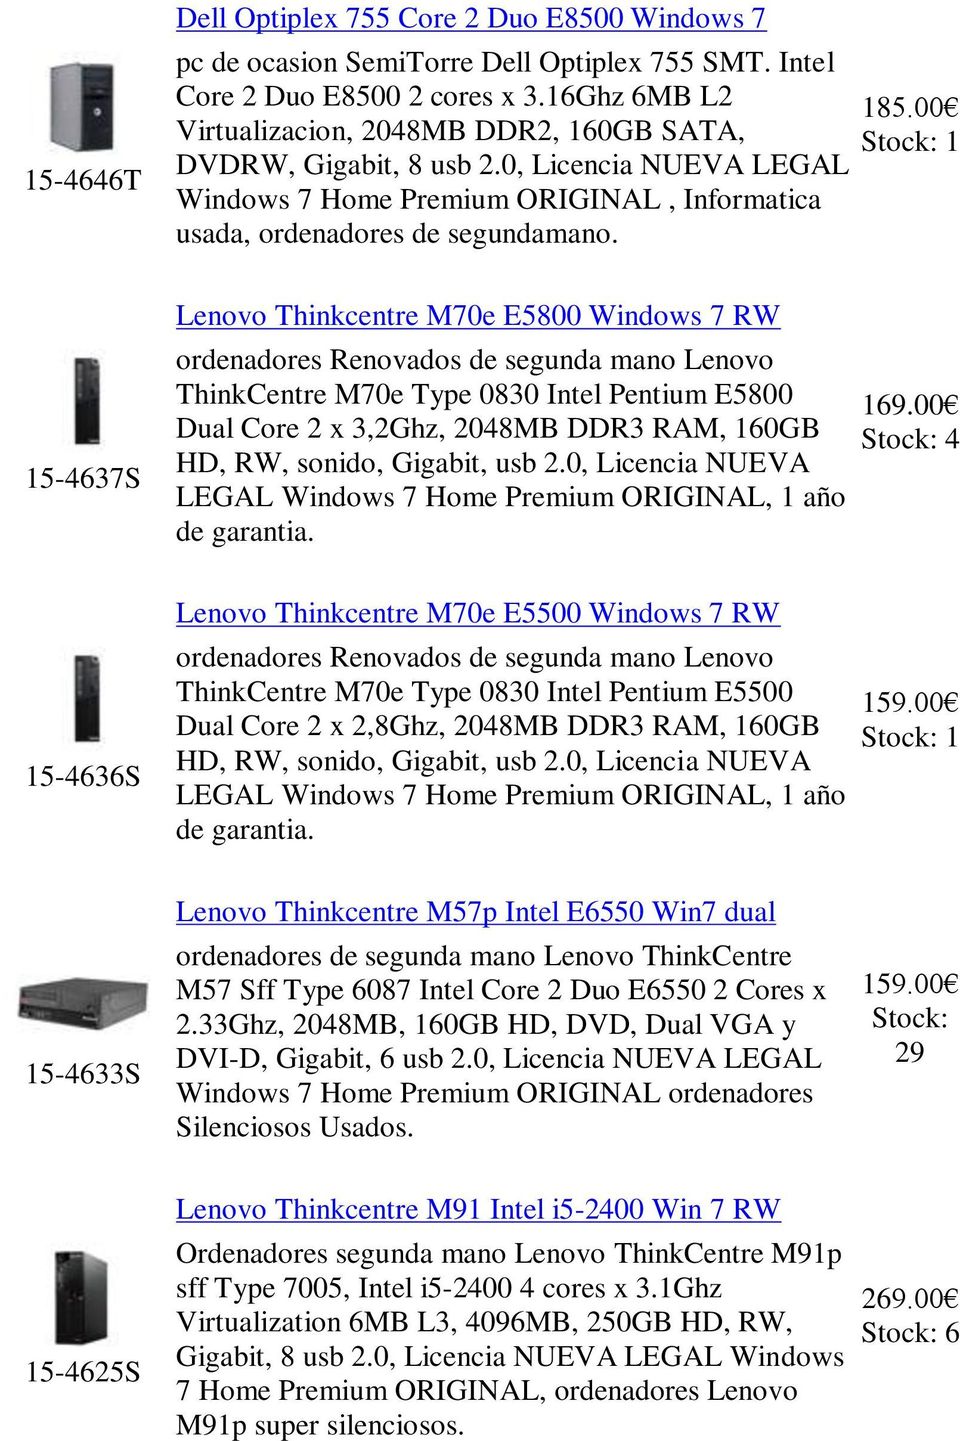 00 15-4637S Lenovo Thinkcentre M70e E5800 Windows 7 RW ordenadores Renovados de segunda mano Lenovo ThinkCentre M70e Type 0830 Intel Pentium E5800 Dual Core 2 x 3,2Ghz, 2048MB DDR3 RAM, 160GB HD, RW,